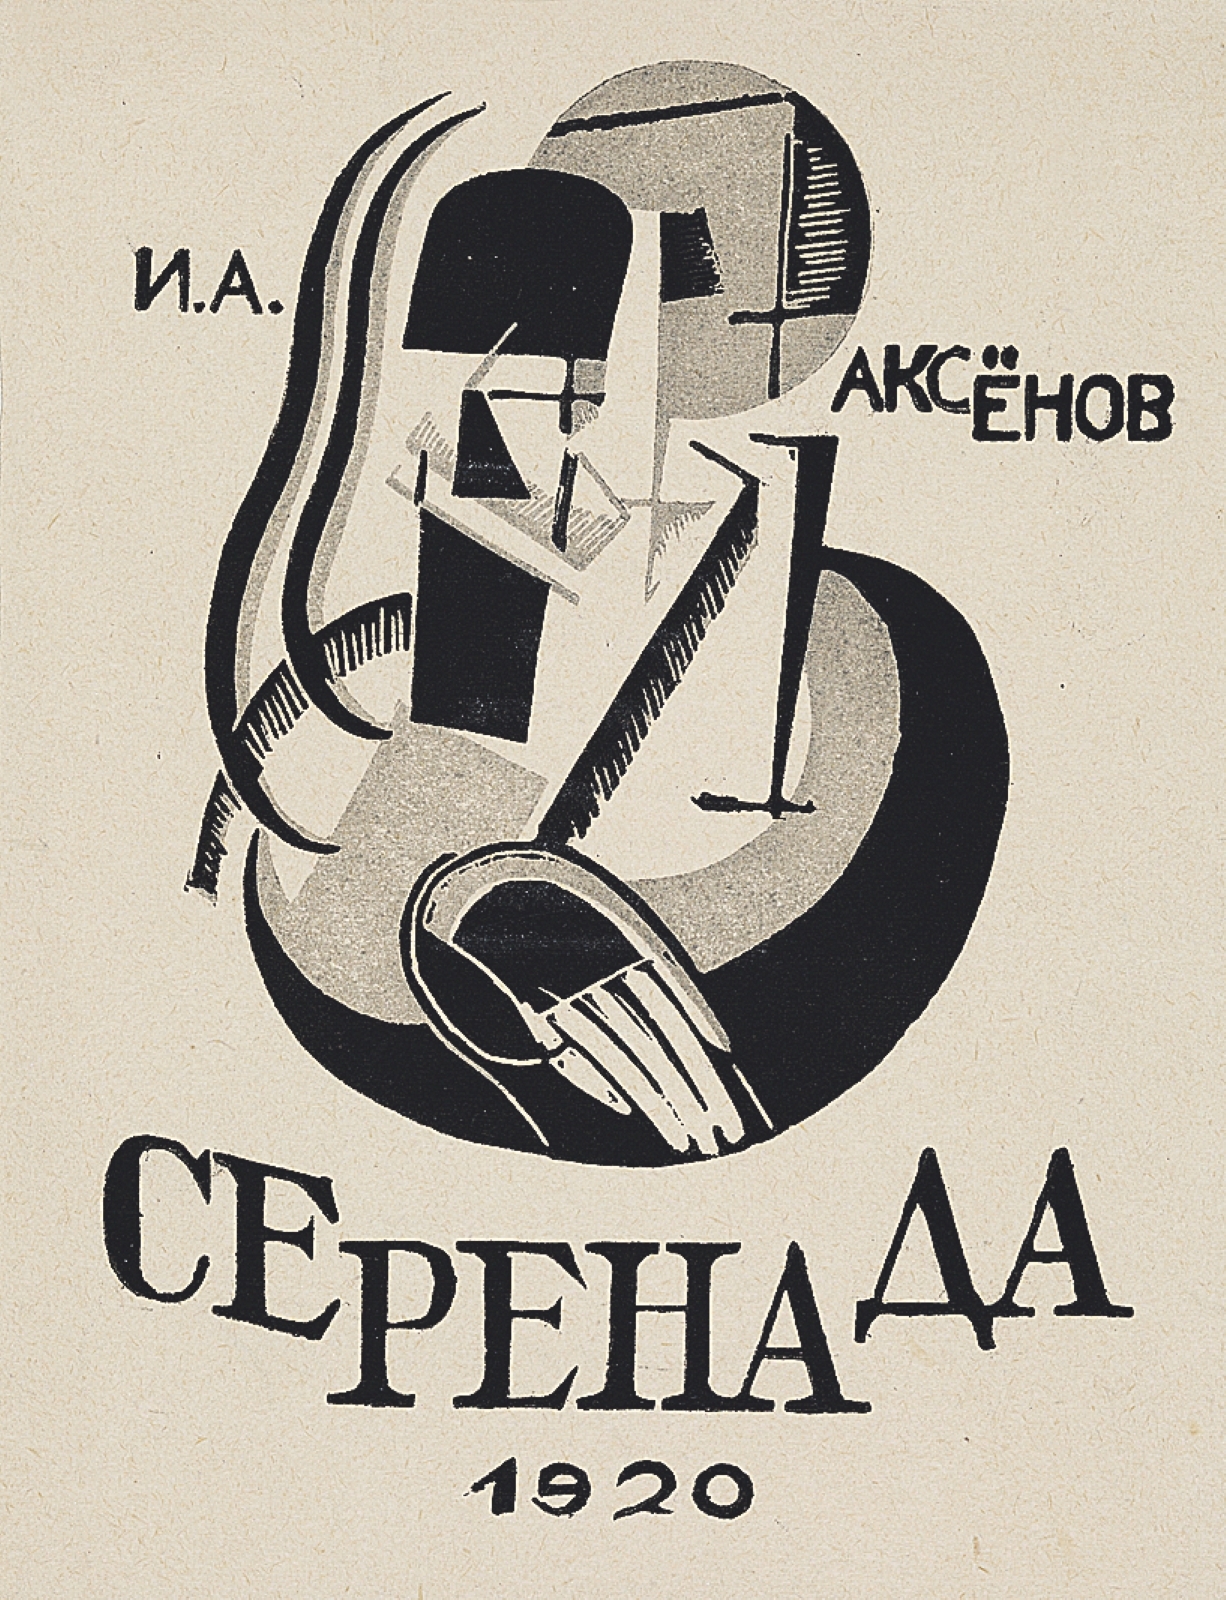 Обложка кк сборнику стихов И.А. Аксëнова «Серенадо». 1920